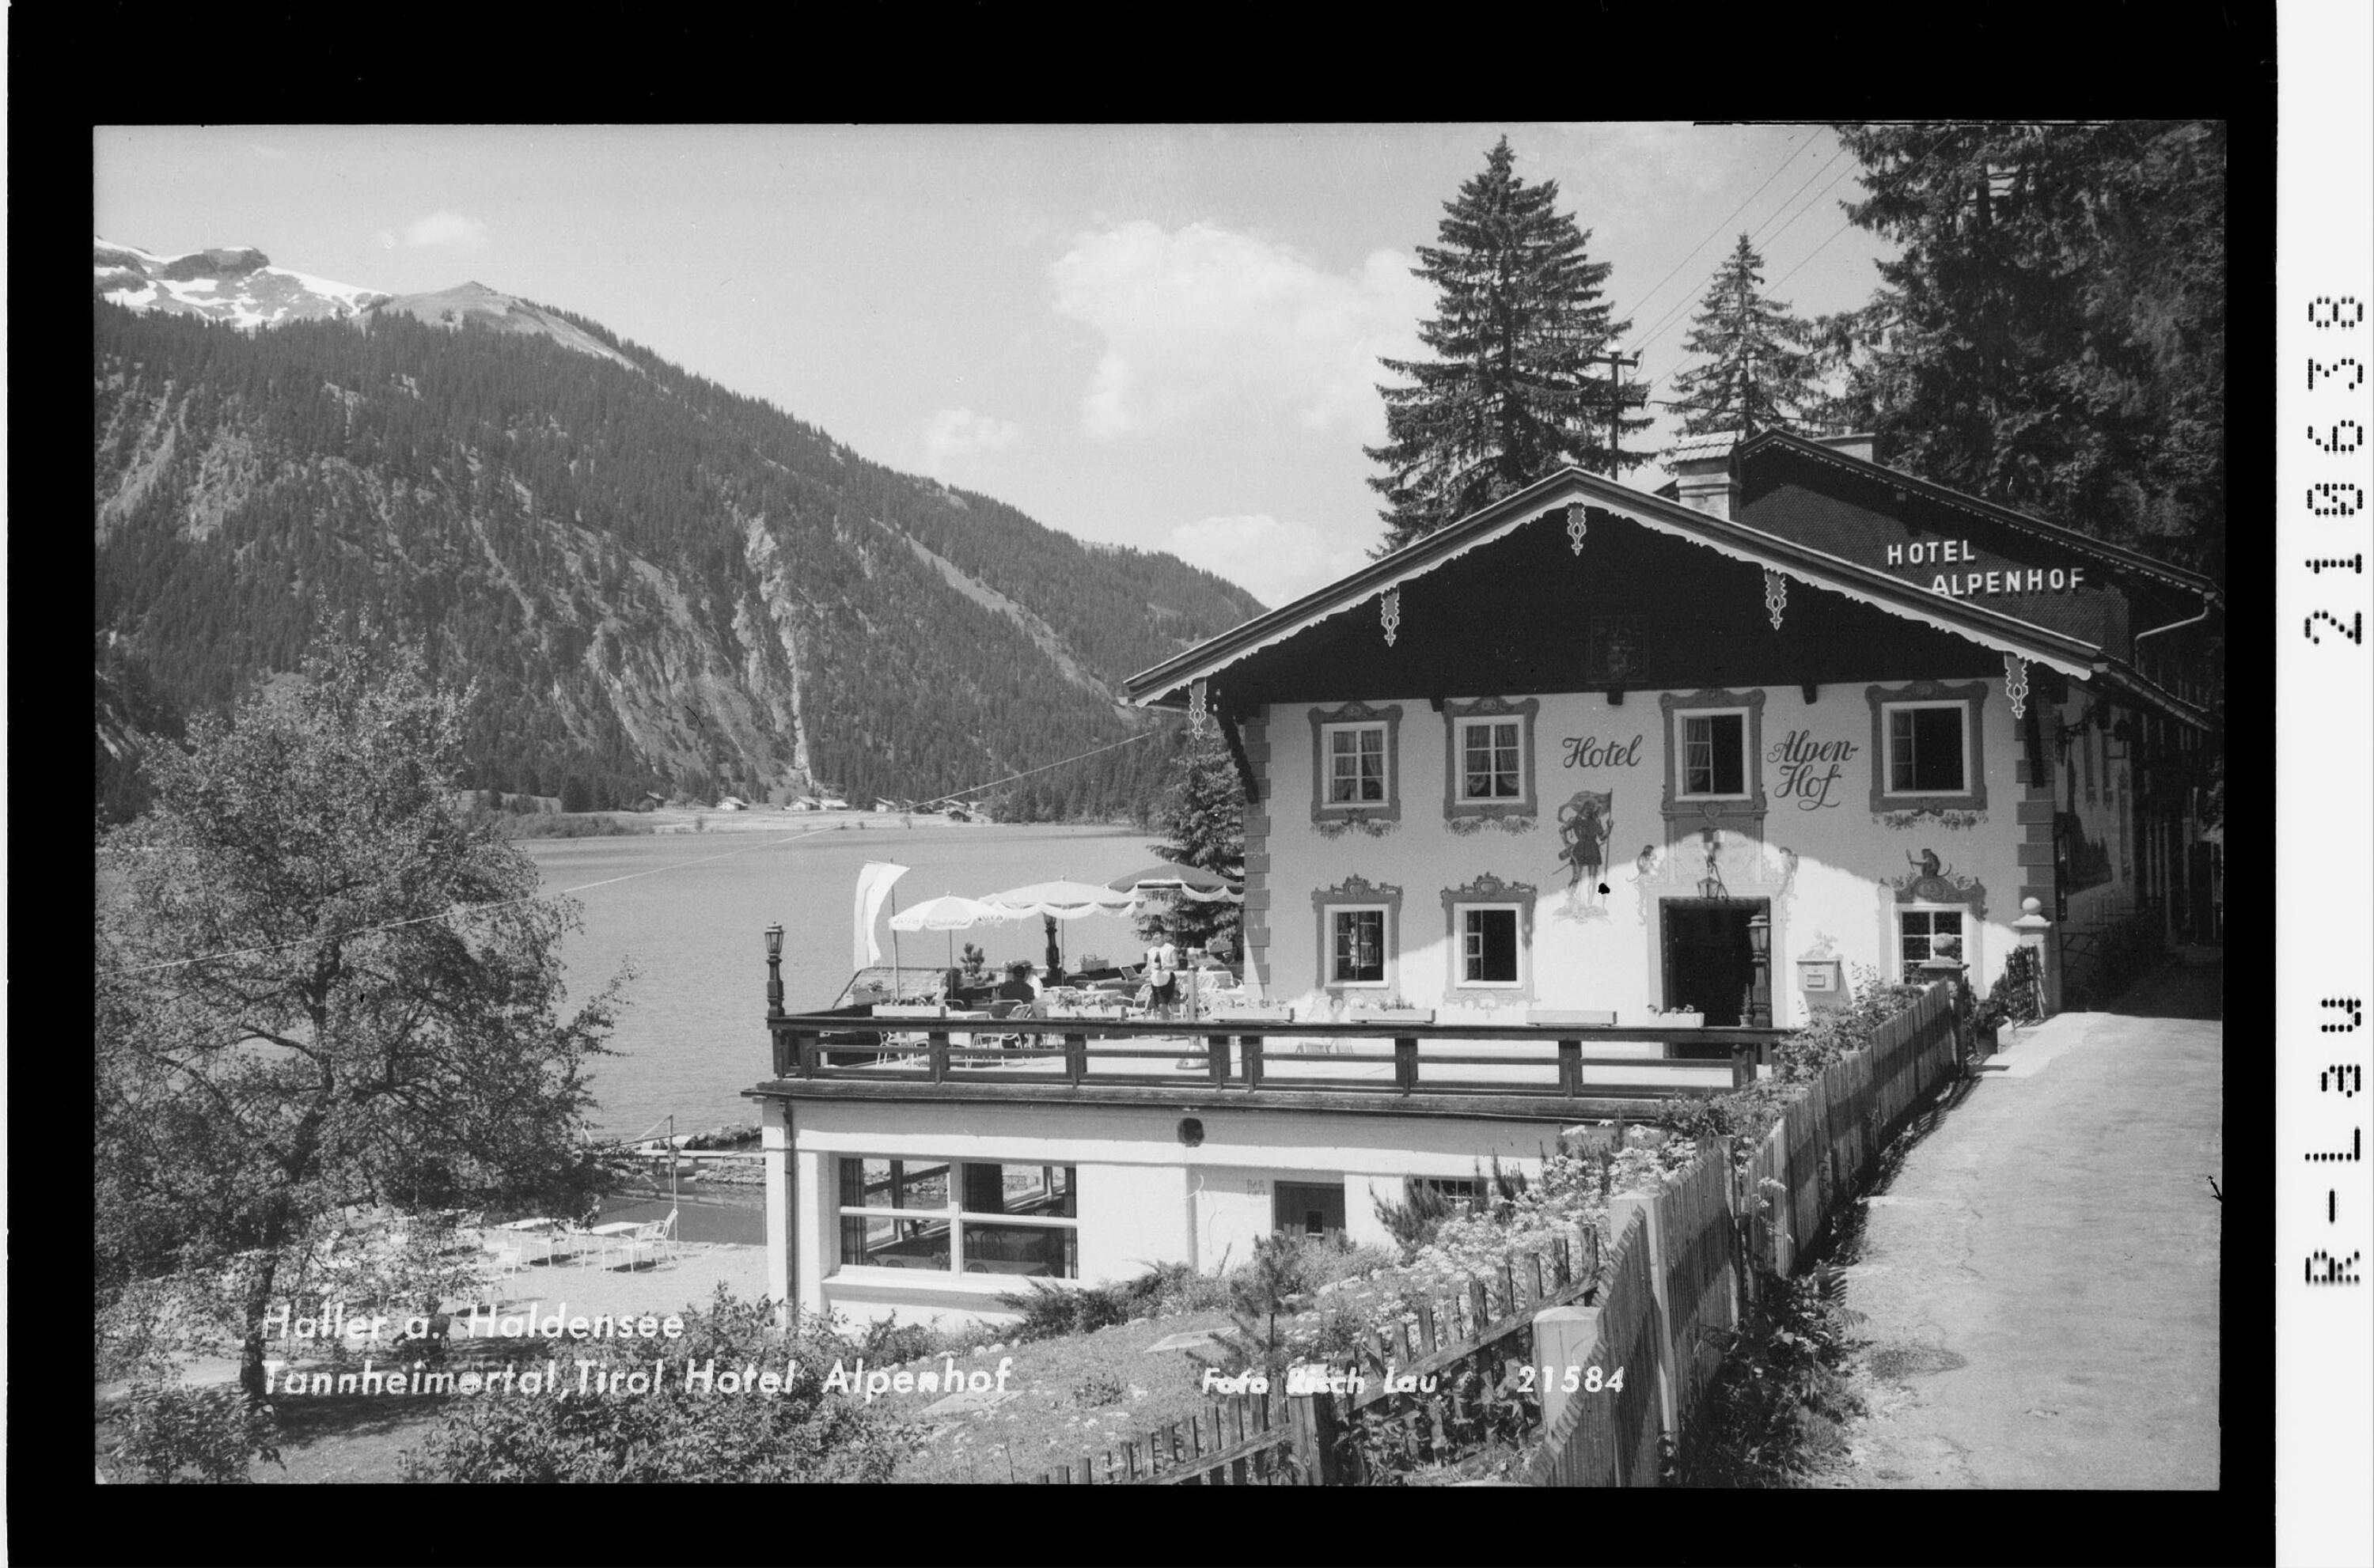 Haller am Haldensee Tannheimertal, Tirol Hotel Alpenhof></div>


    <hr>
    <div class=